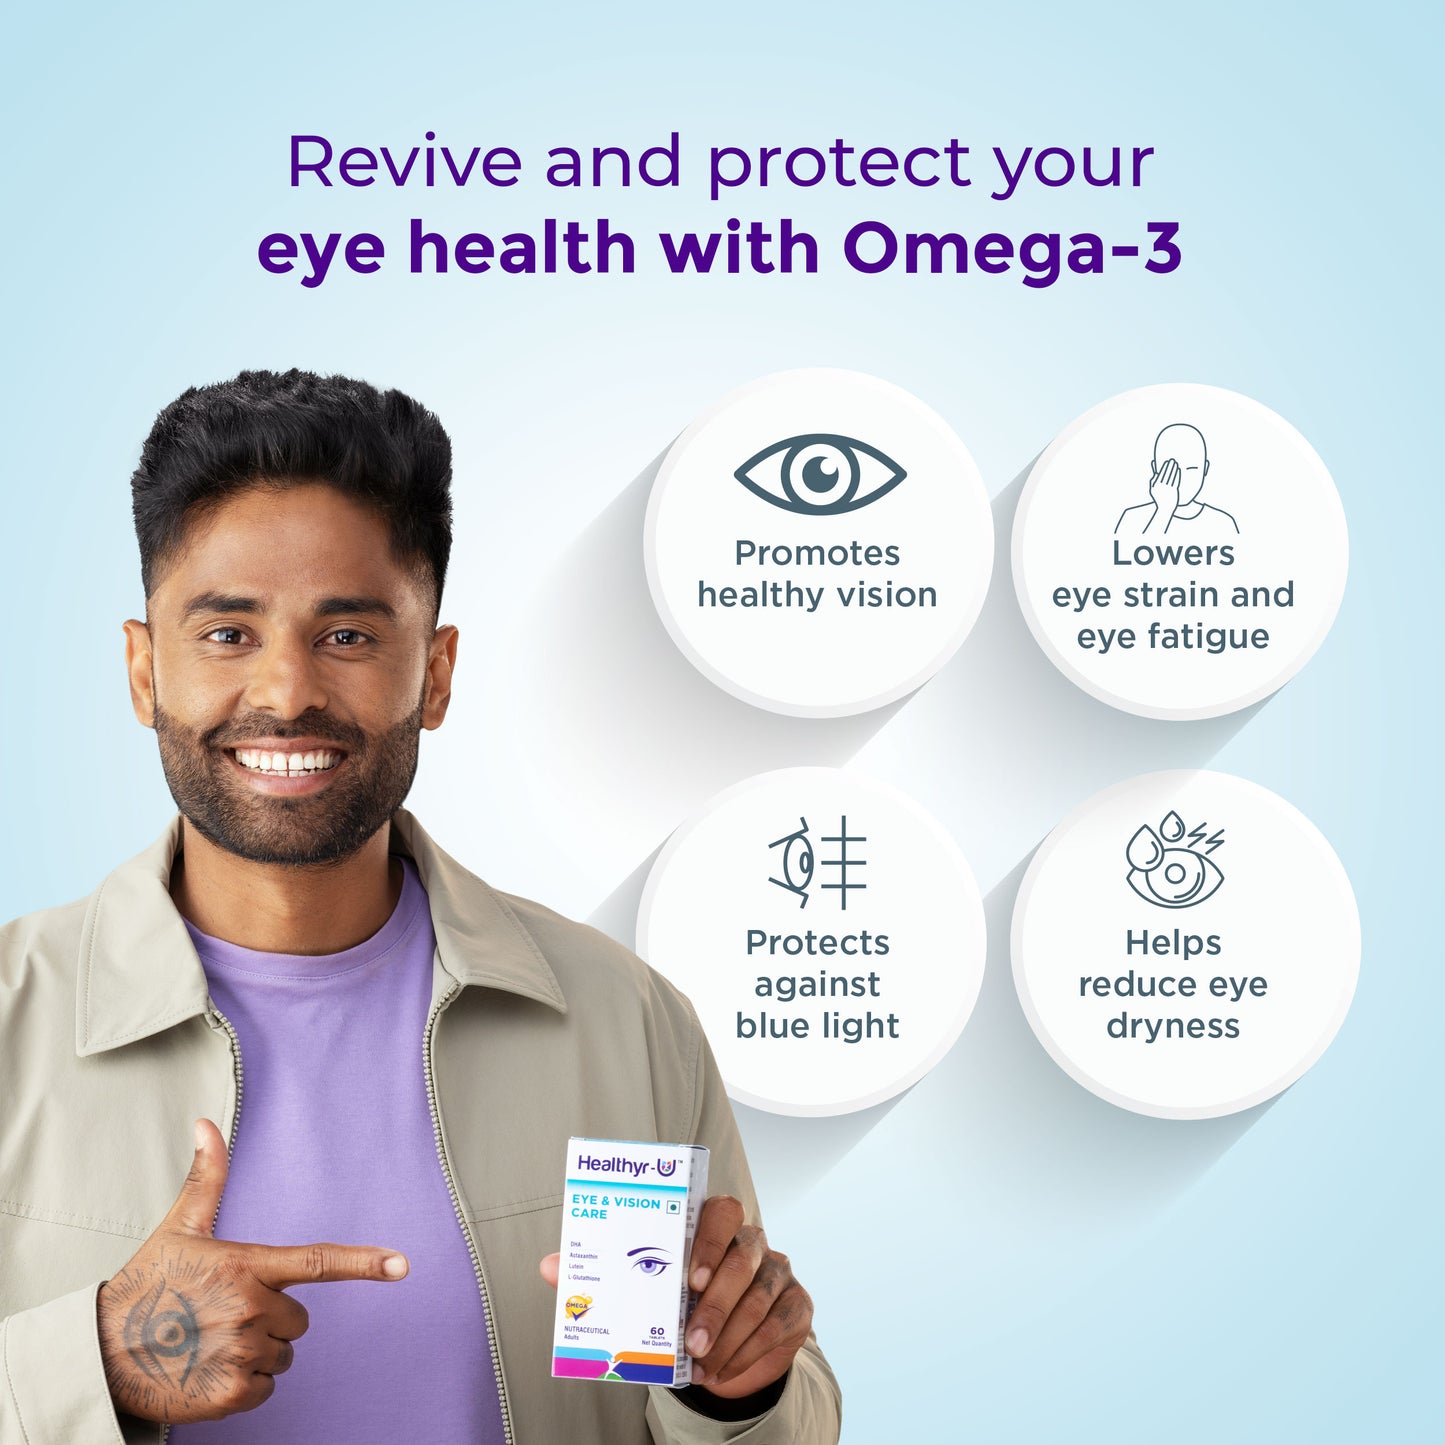 Eye-and-Vision-Care-Omega-3-Healthyr-U